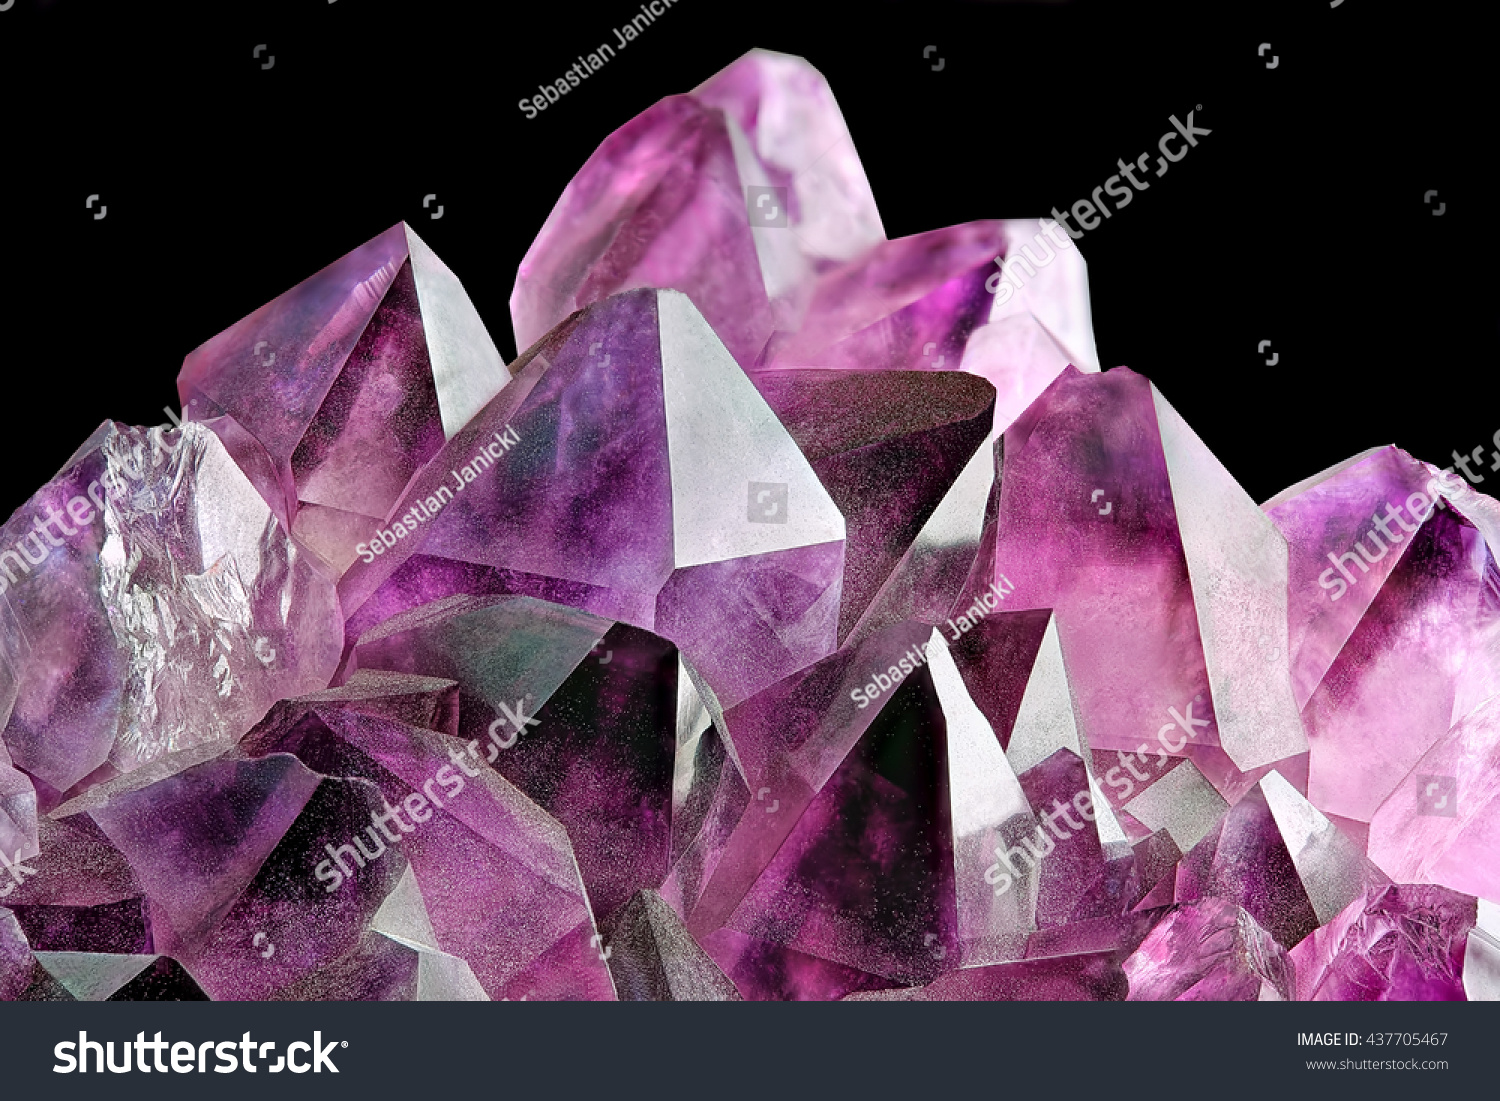 Crystal Stone macro mineral, purple rough amethyst quartz crystals on black background #437705467